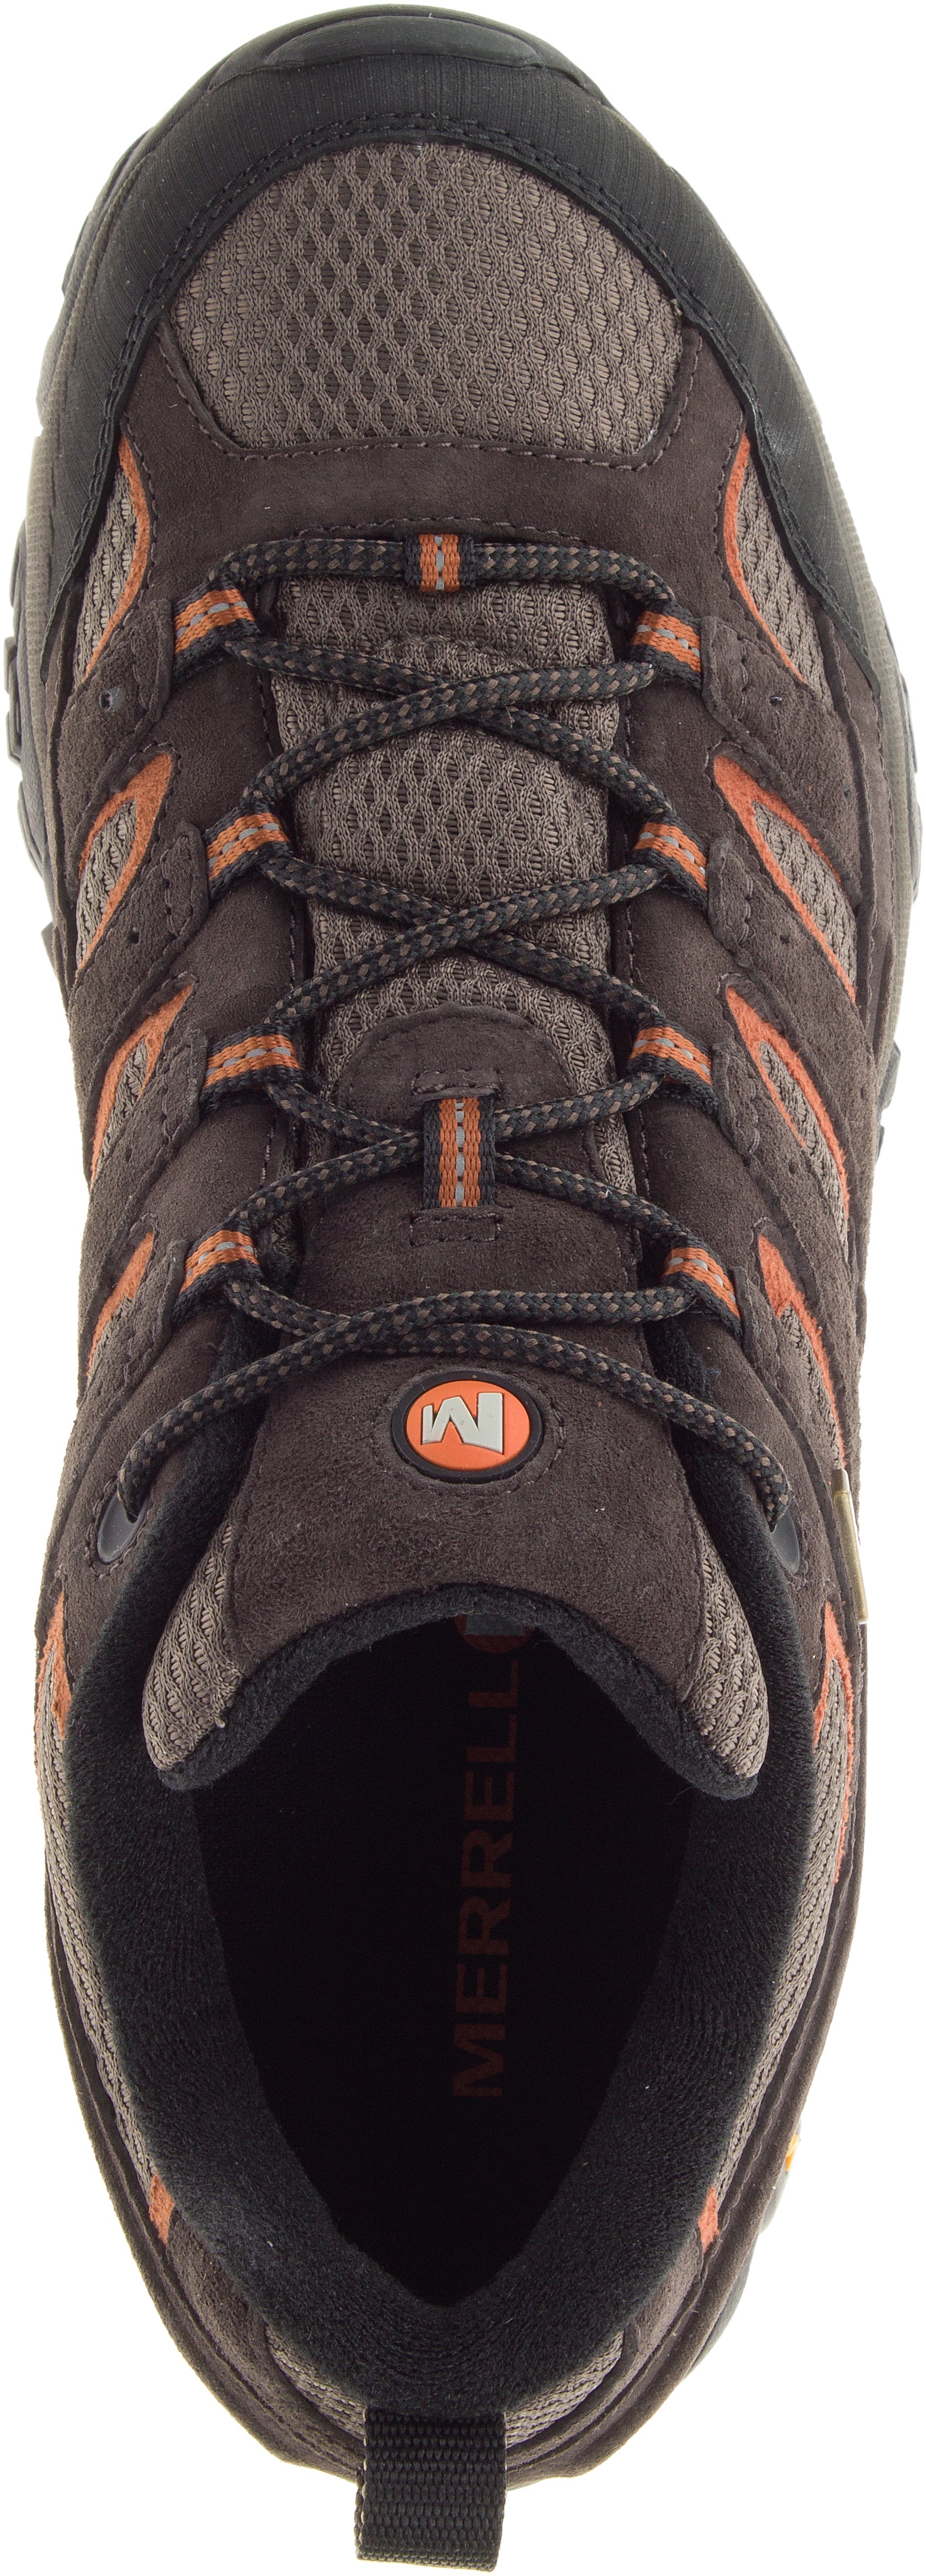 Merrell Moab 2 Waterproof Shoe Men's